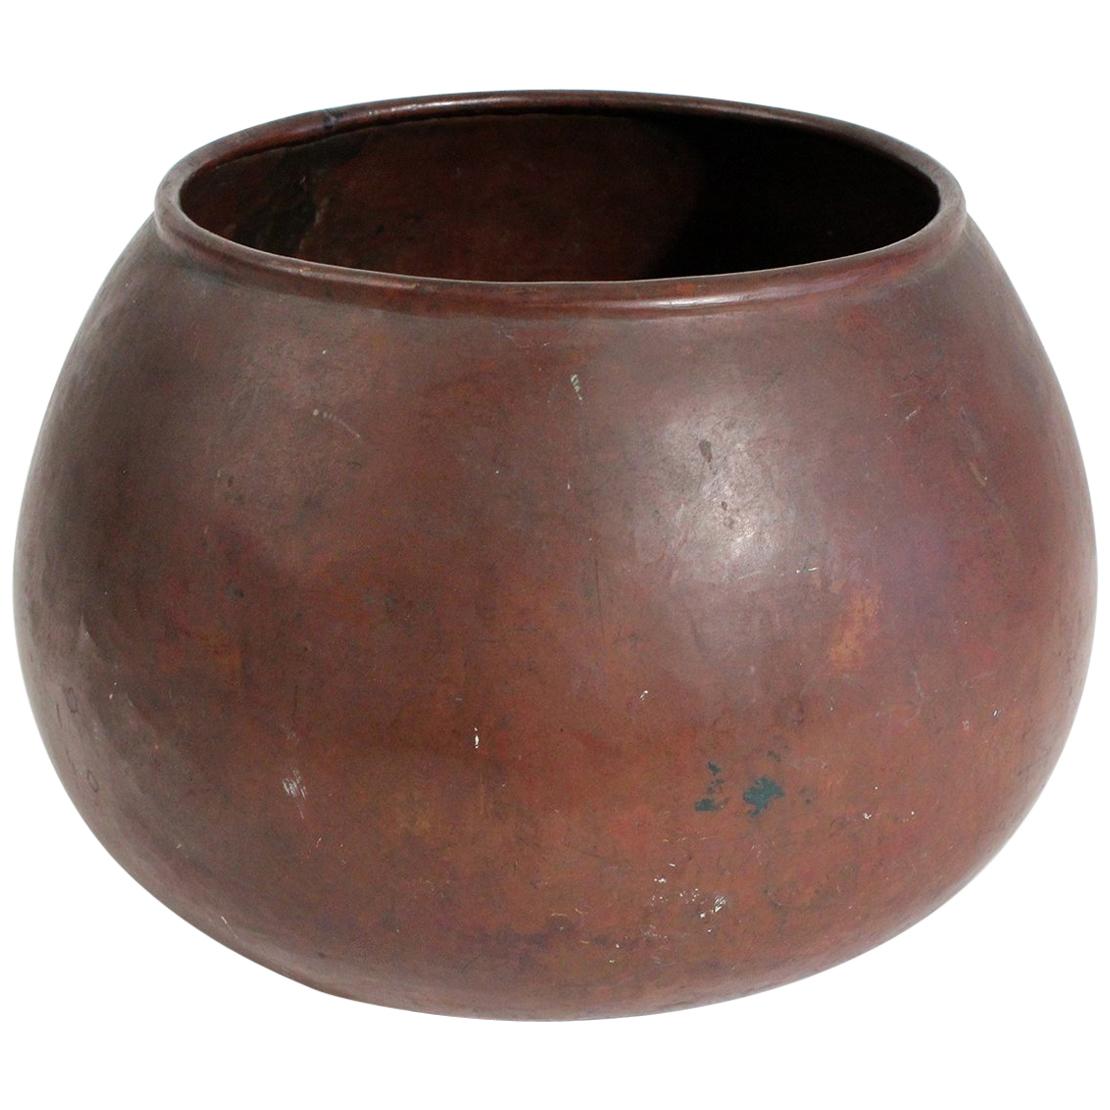 1910 Dirk Van Erp & D’arcy Gaw Hand-Hammered Copper Warty Jardiniere Vase Pot